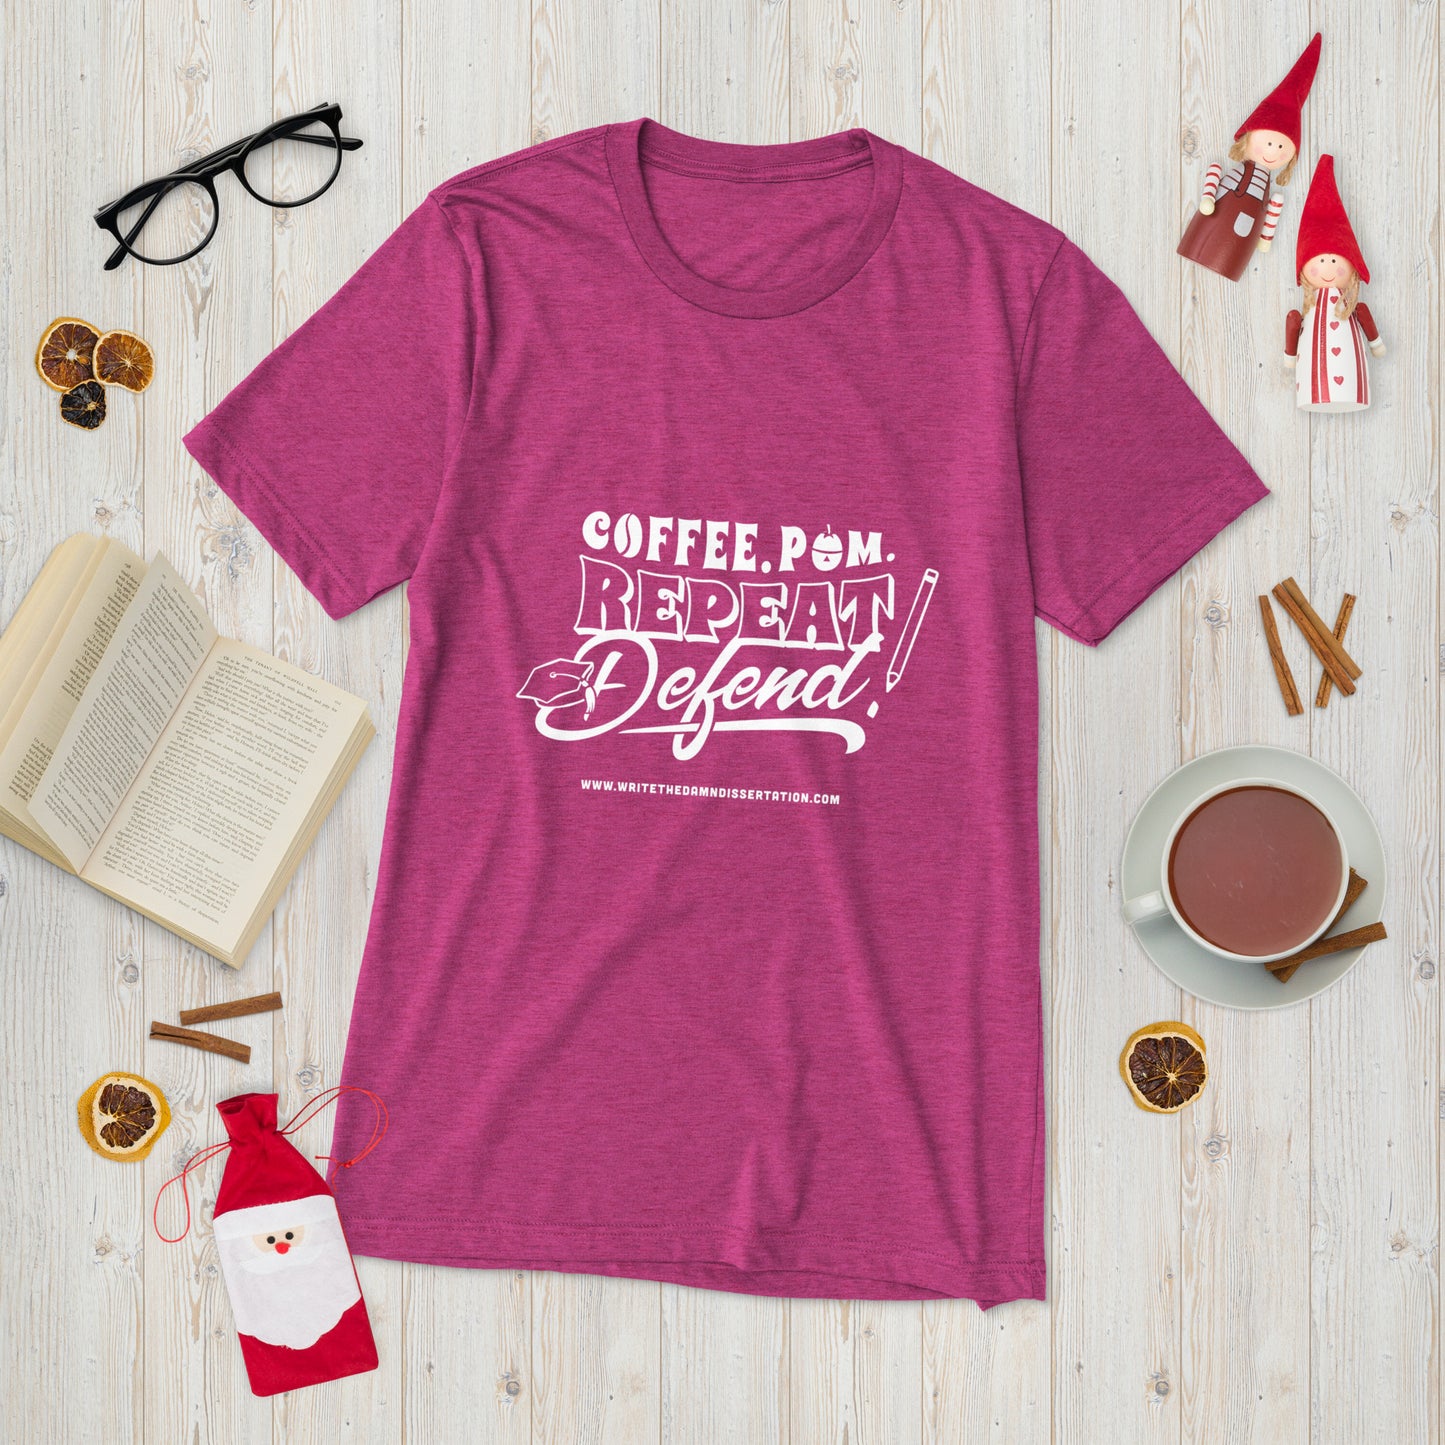 Coffee.Pom.Repeat.Defend! Short sleeve t-shirt